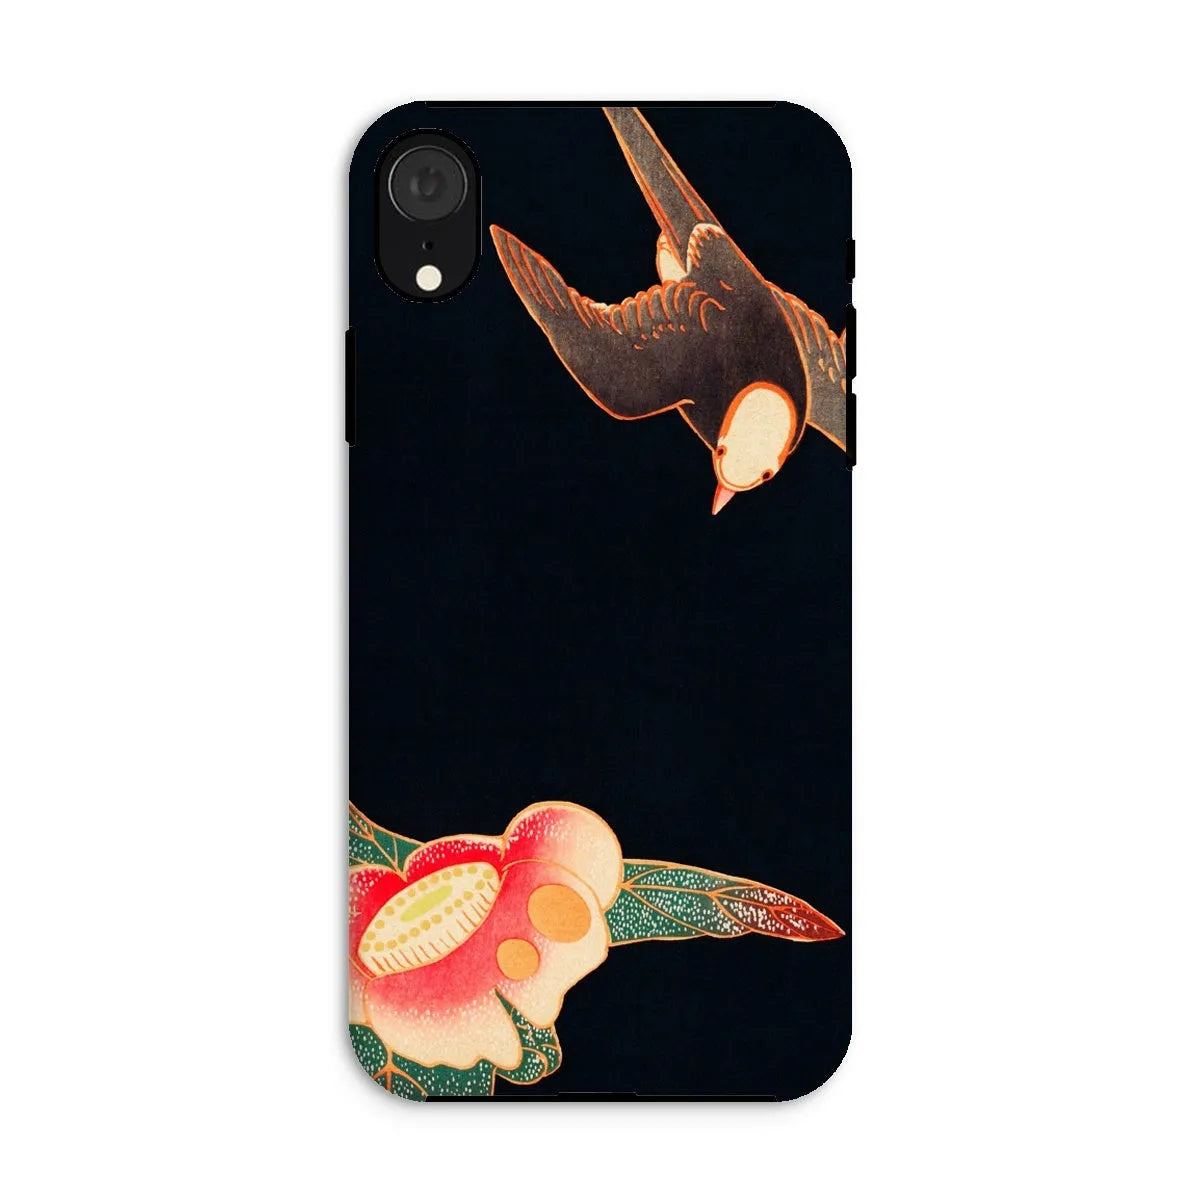 Swallow & Camellia - Meiji Era Art Phone Case - Ito Jakuchu - Iphone Xr / Matte - Mobile Phone Cases - Aesthetic Art